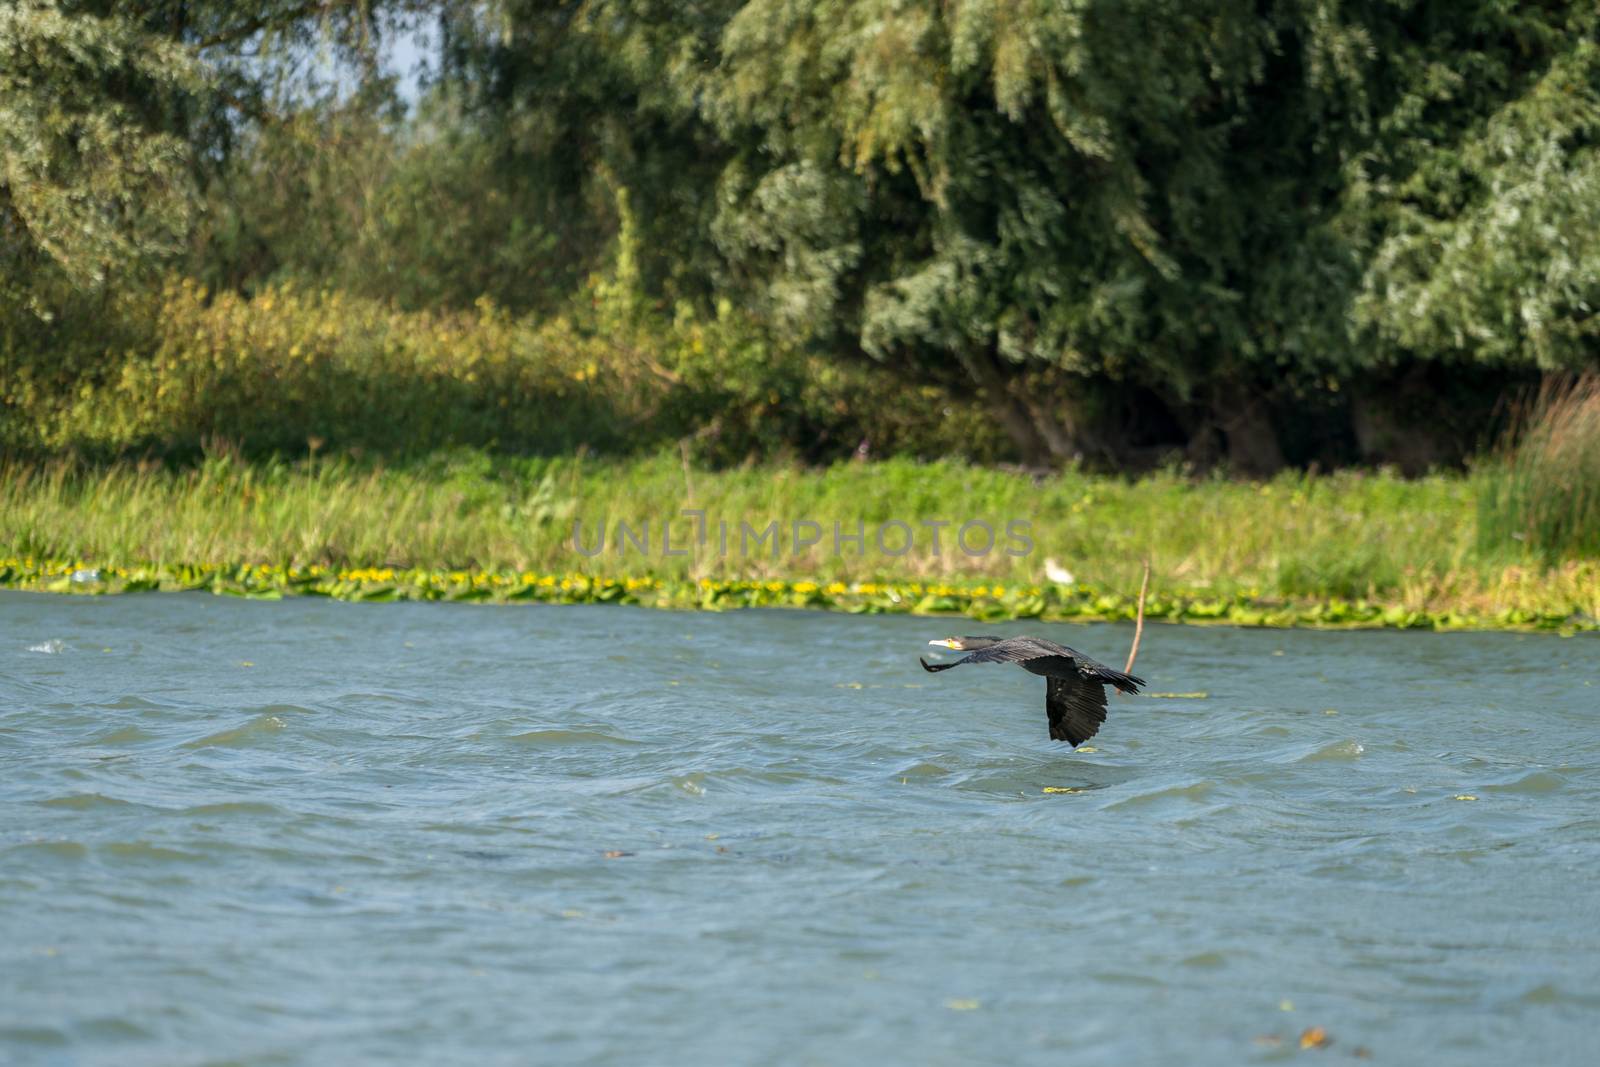 Cormorant flying along the Danube Delta